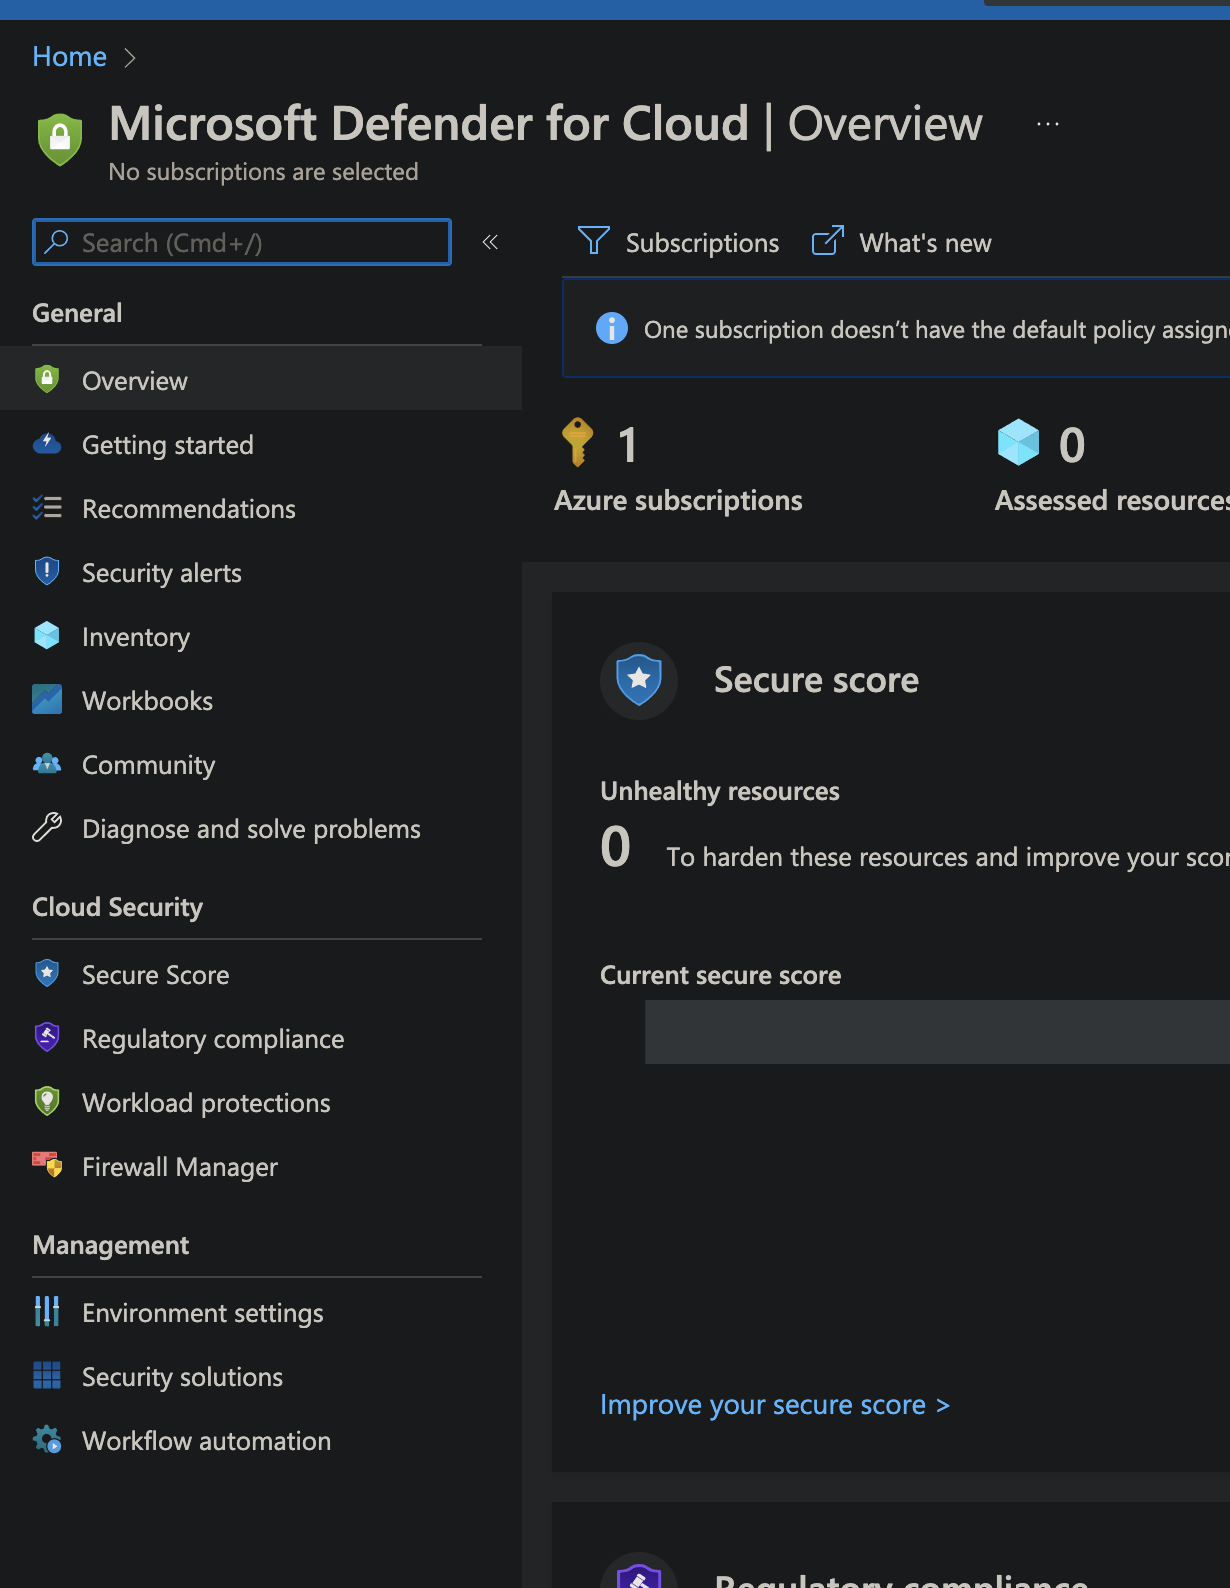 Microsoft Defender for Cloud Overview screenshot